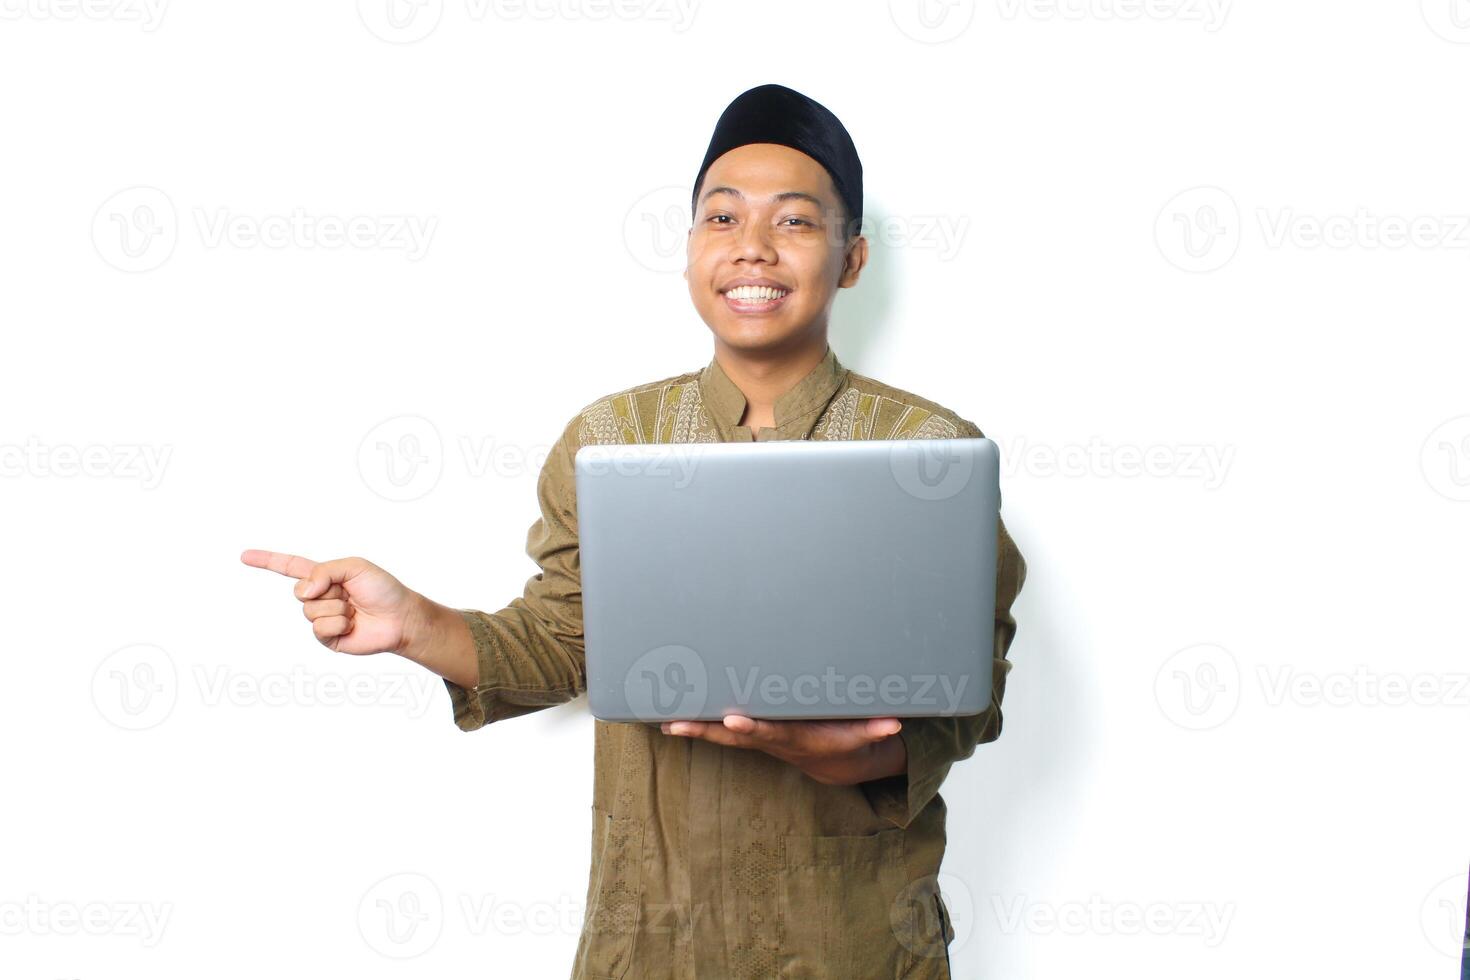 glimlachen Aziatisch moslim Mens Holding laptop richten naar naast geïsoleerd Aan wit achtergrond foto